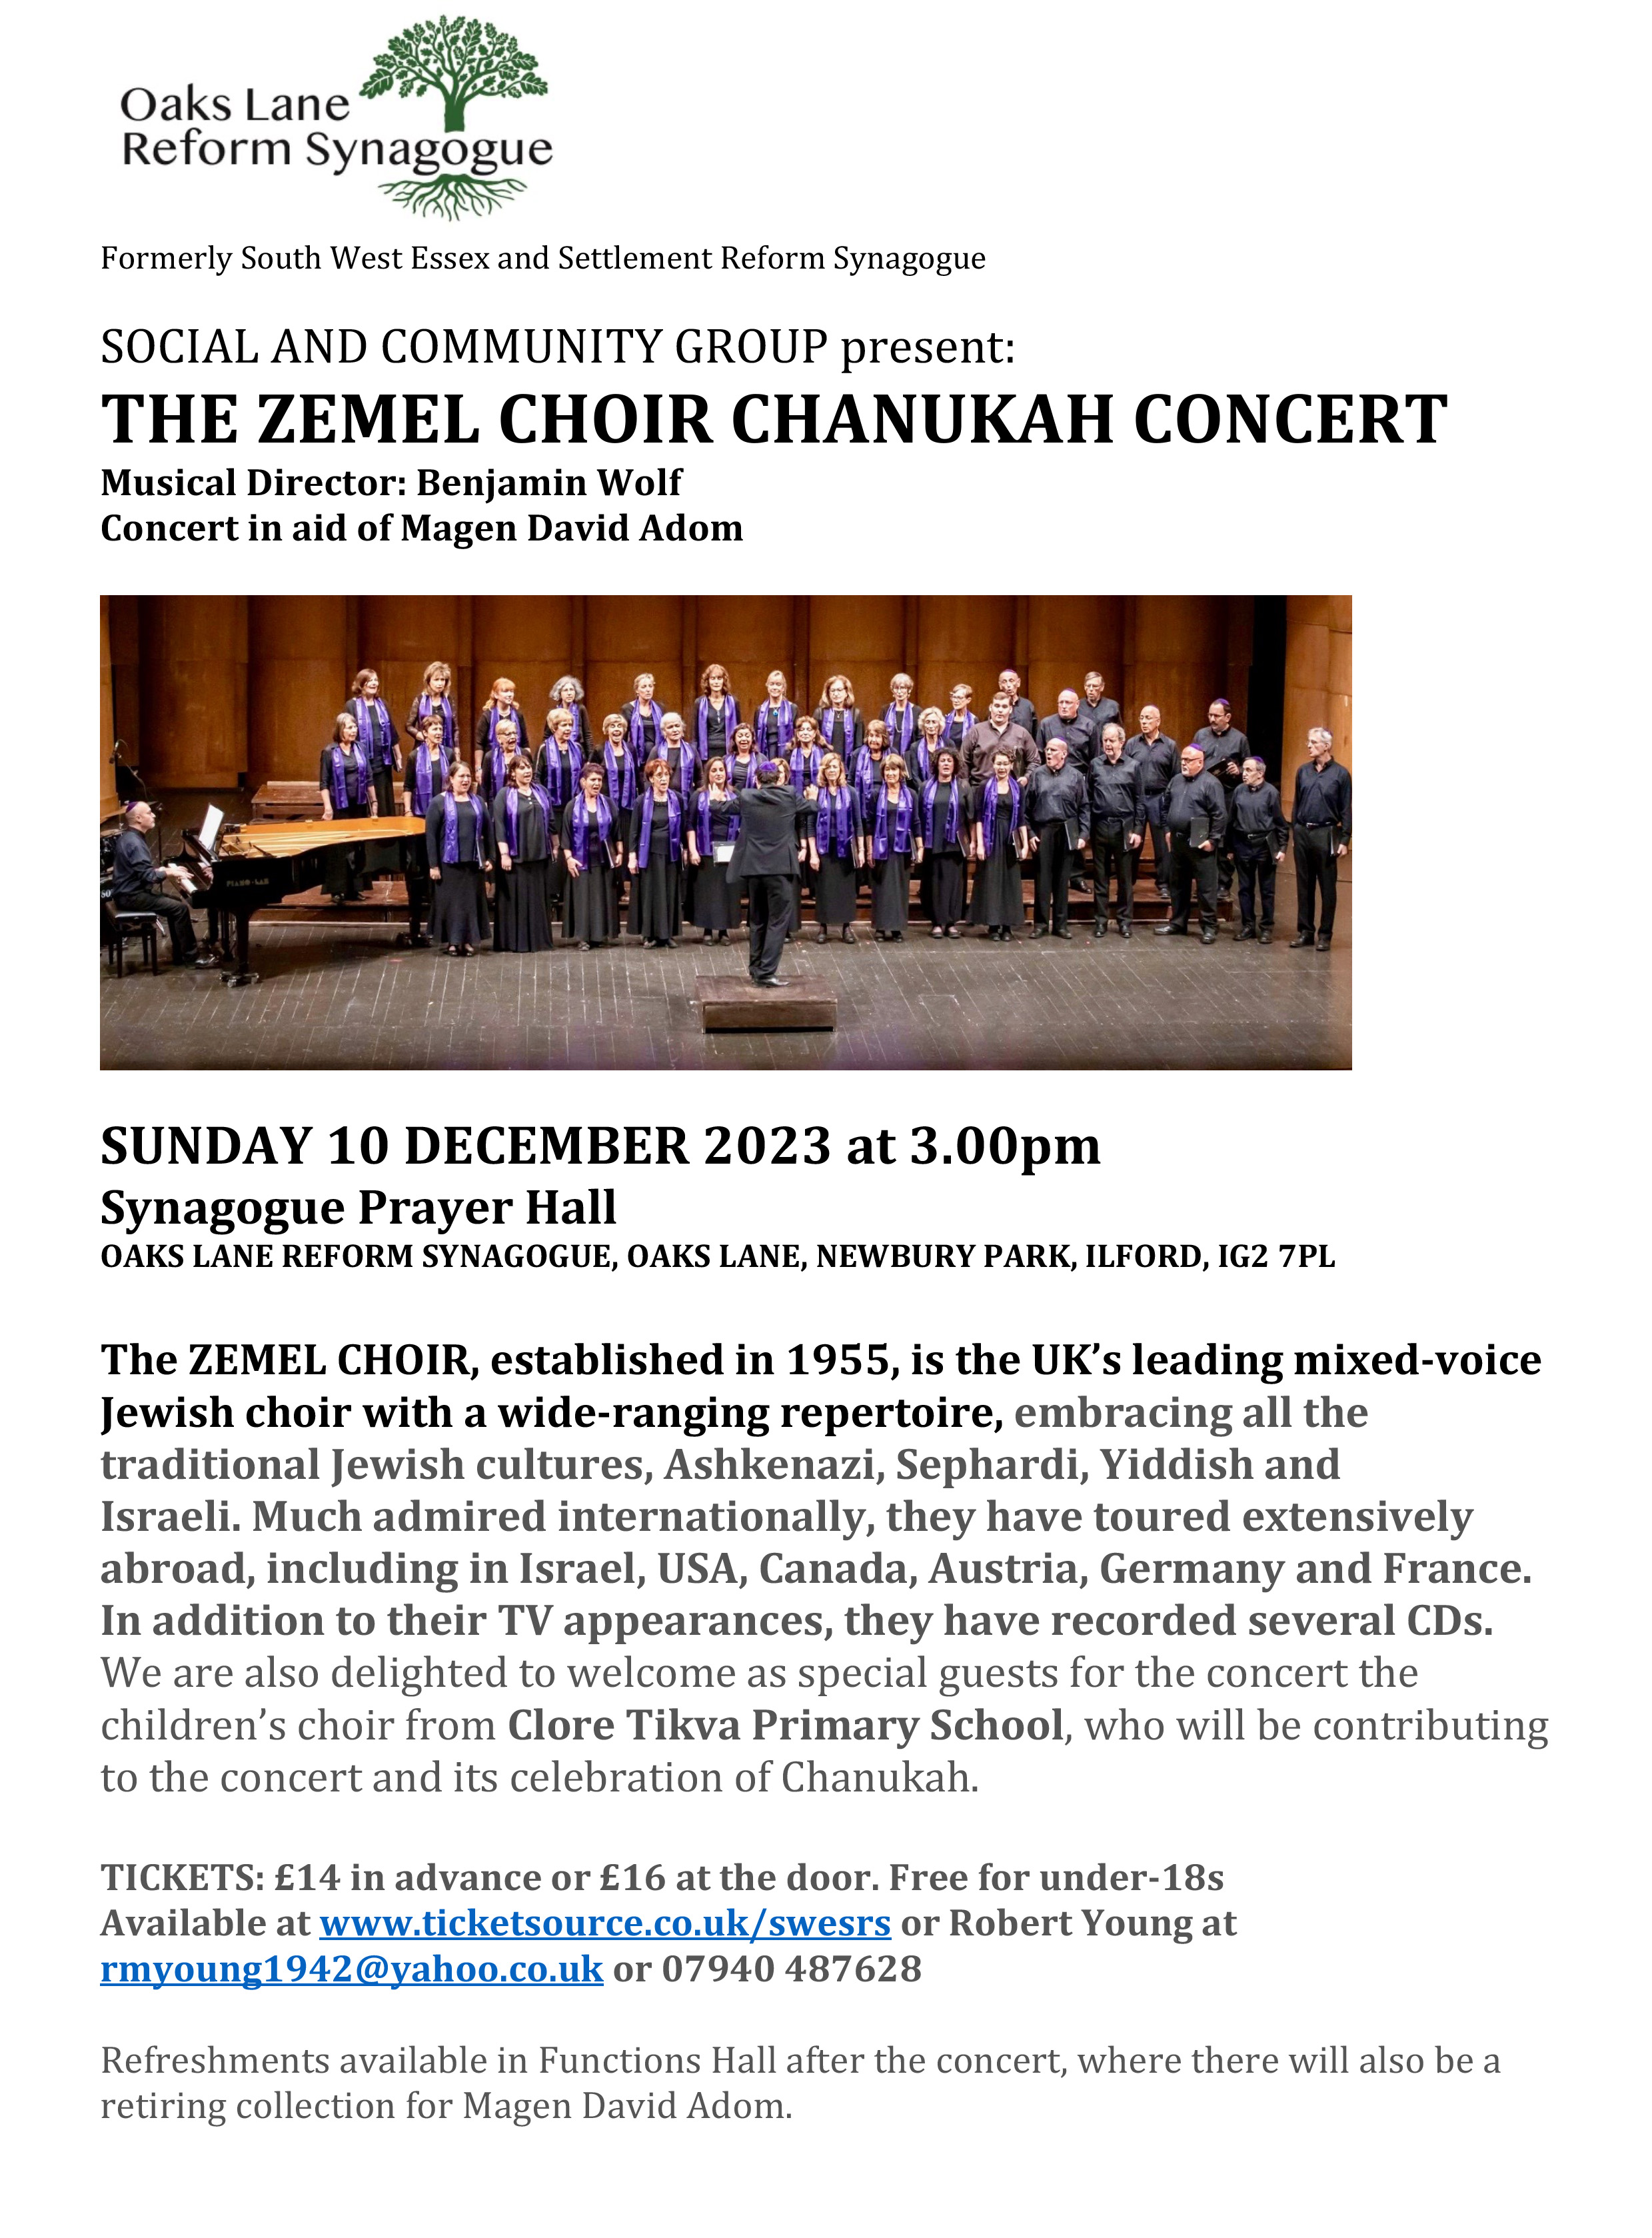 The Zemel Choir Chanukah Concert at Oaks Lane Reform Synagogue